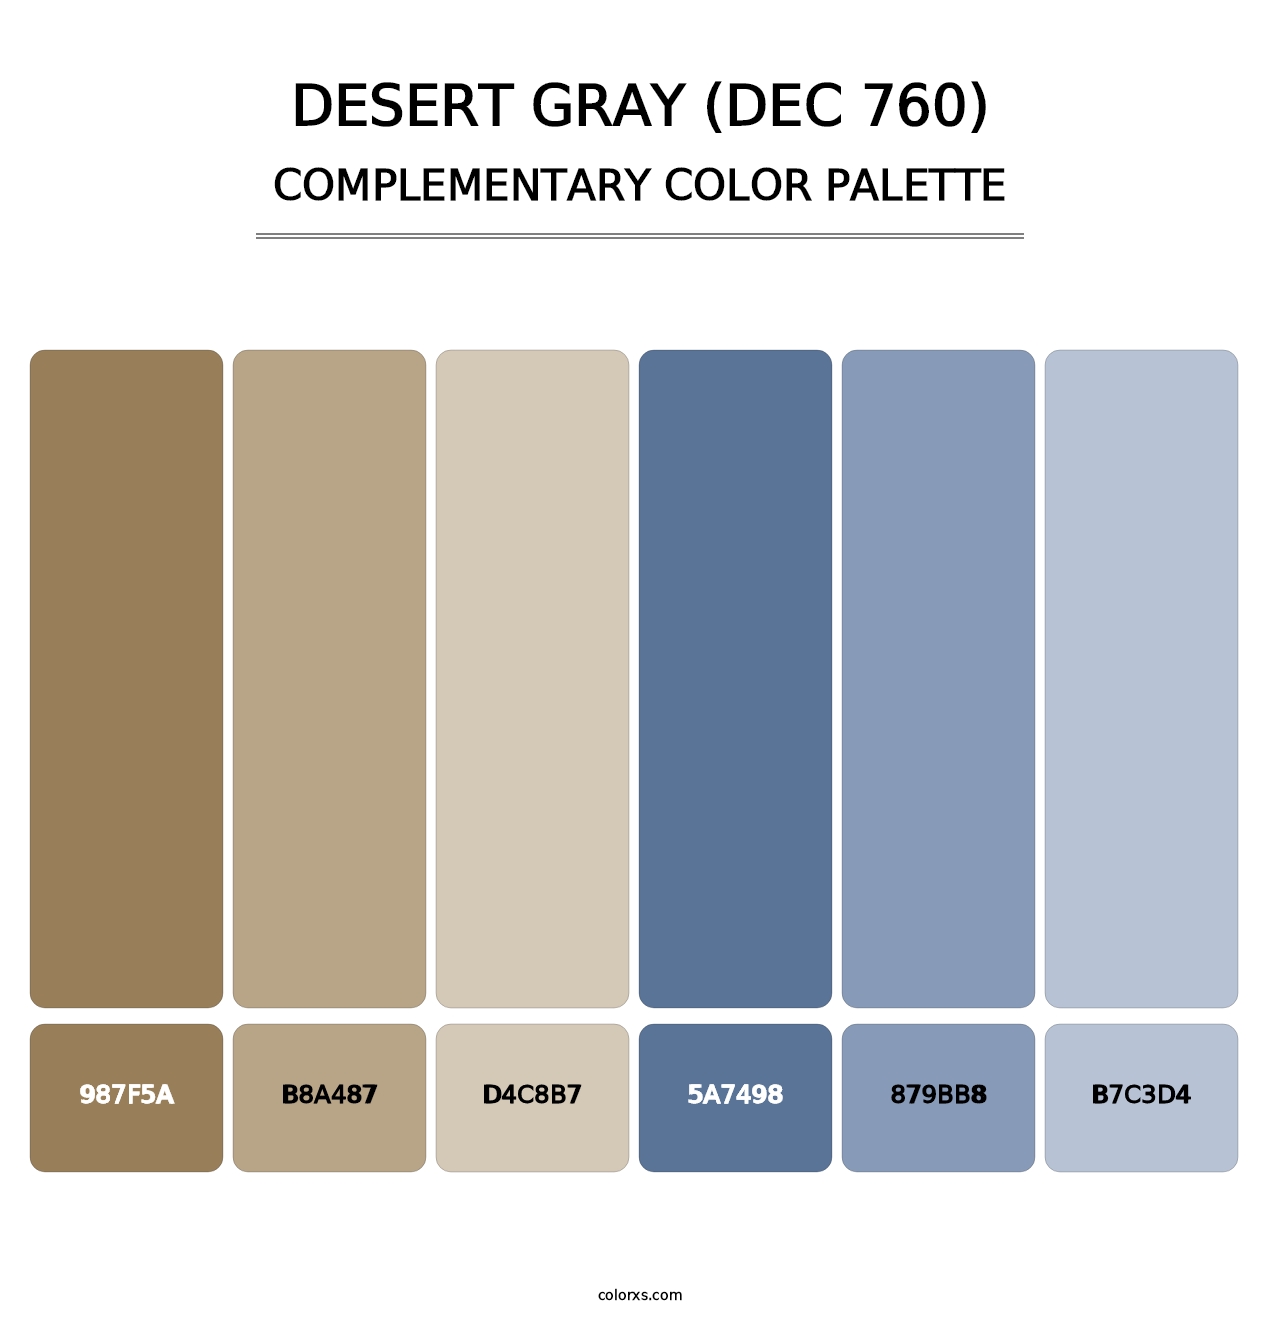 Desert Gray (DEC 760) - Complementary Color Palette